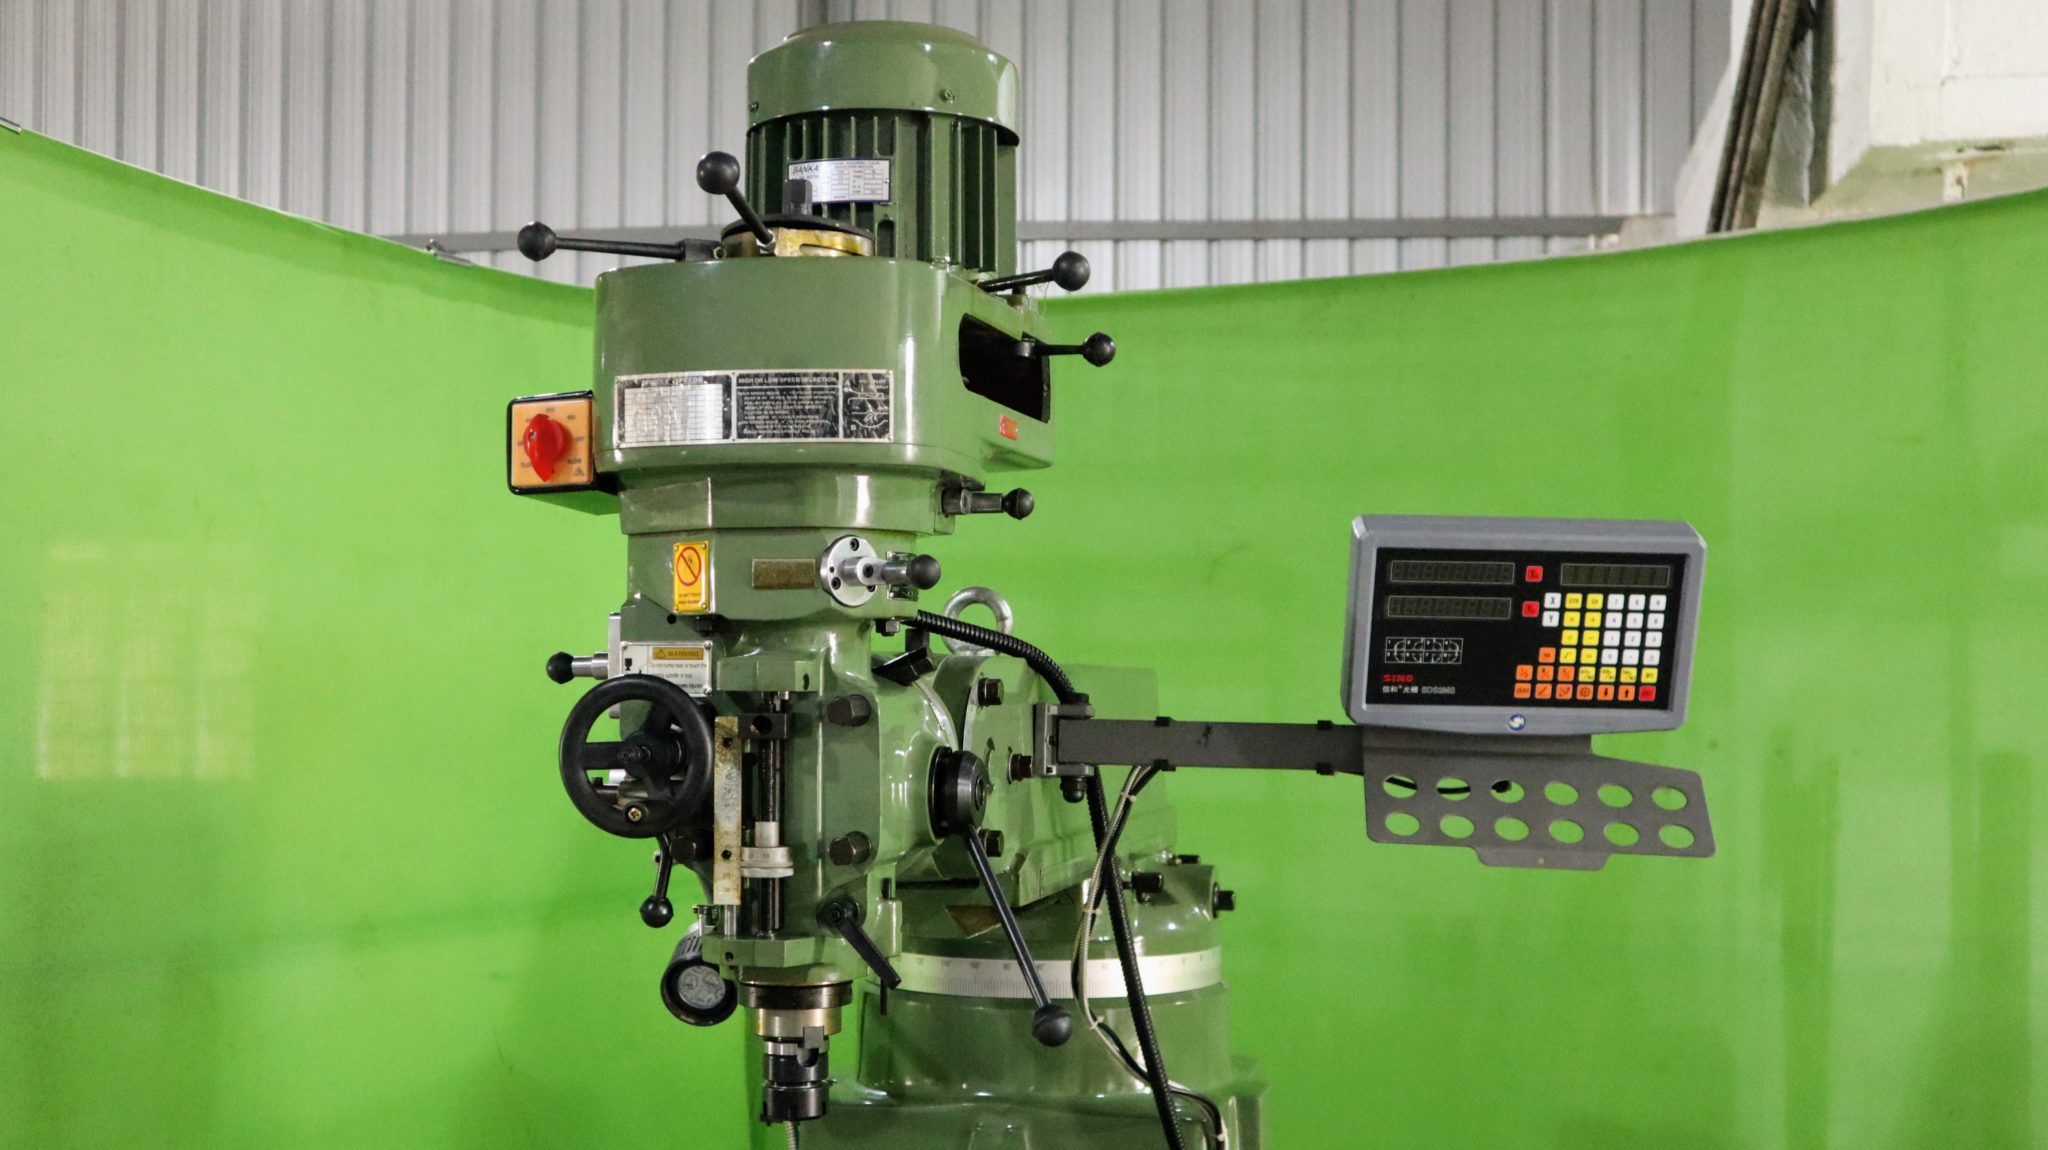 M4 Vertical Turret Milling Machine Milling Machine Manufacturer In India Milling Machine Price